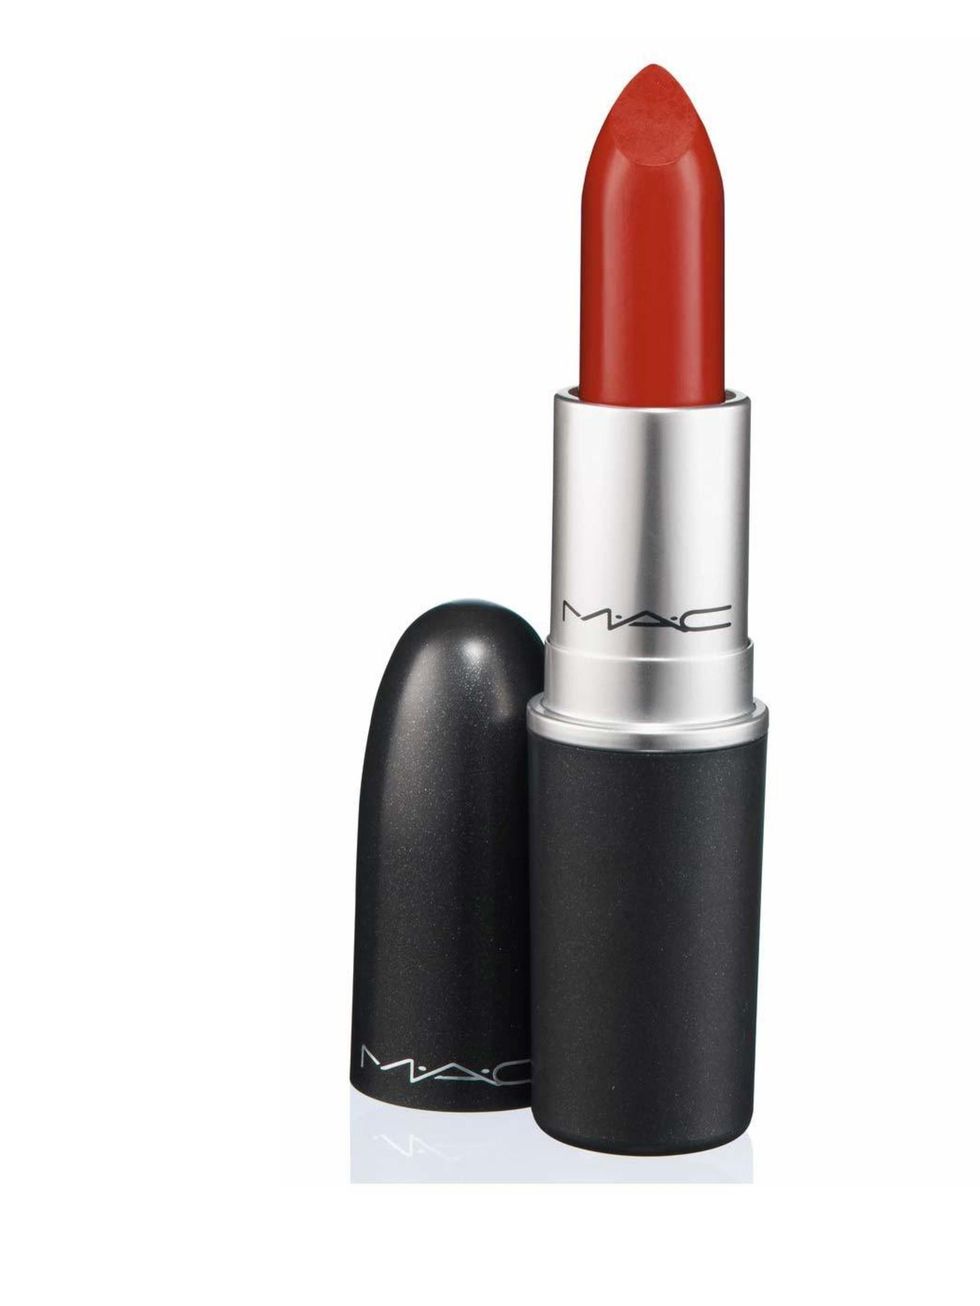 <p>Joely wears <a href="http://www.maccosmetics.co.uk/product/shaded/168/310/Lipstick">MAC Lipstick in Lady Danger, £14</a></p>